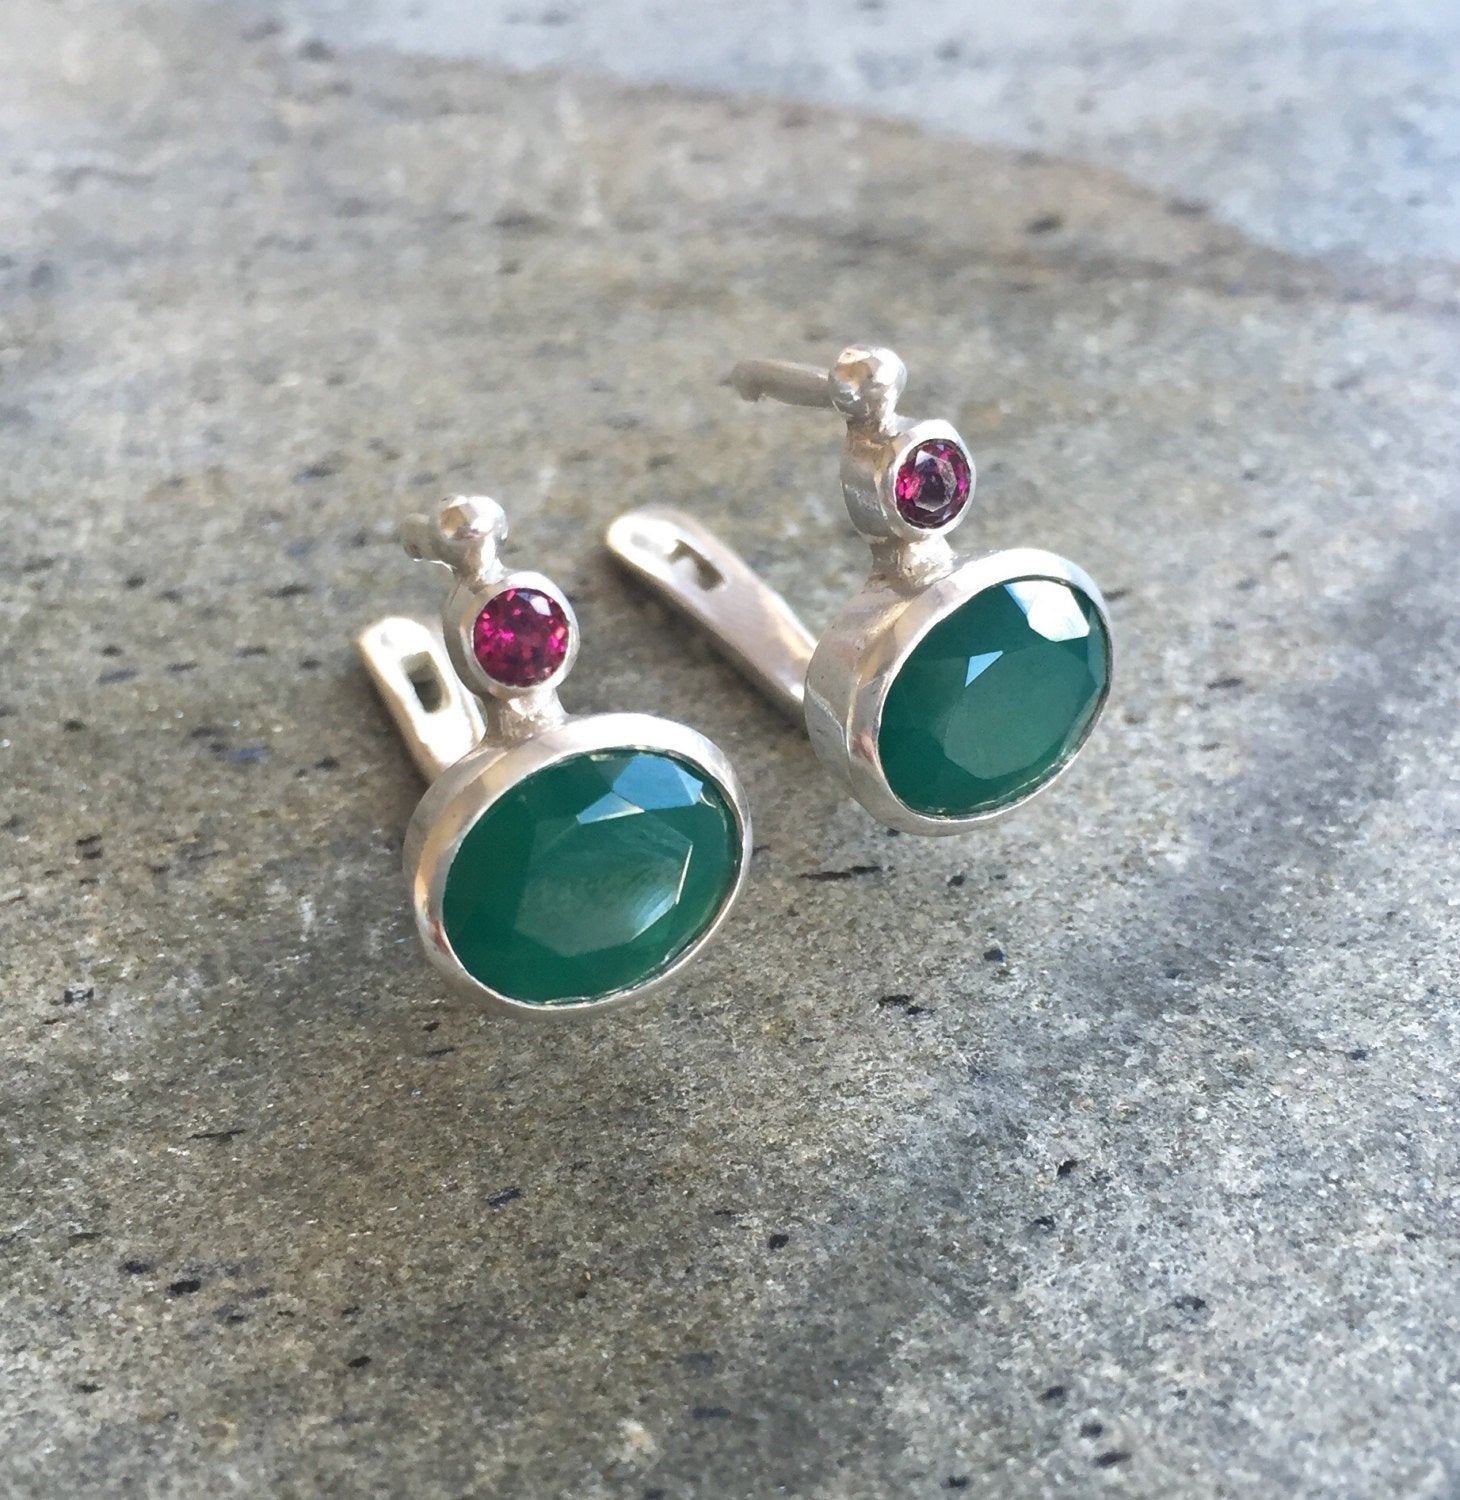 Emerald Earrings, Created Emerald, Green Emerald Earrings, Garnet Earrings, Unique Earrings, Vintage Earrings, Solid Silver, Silver Earrings